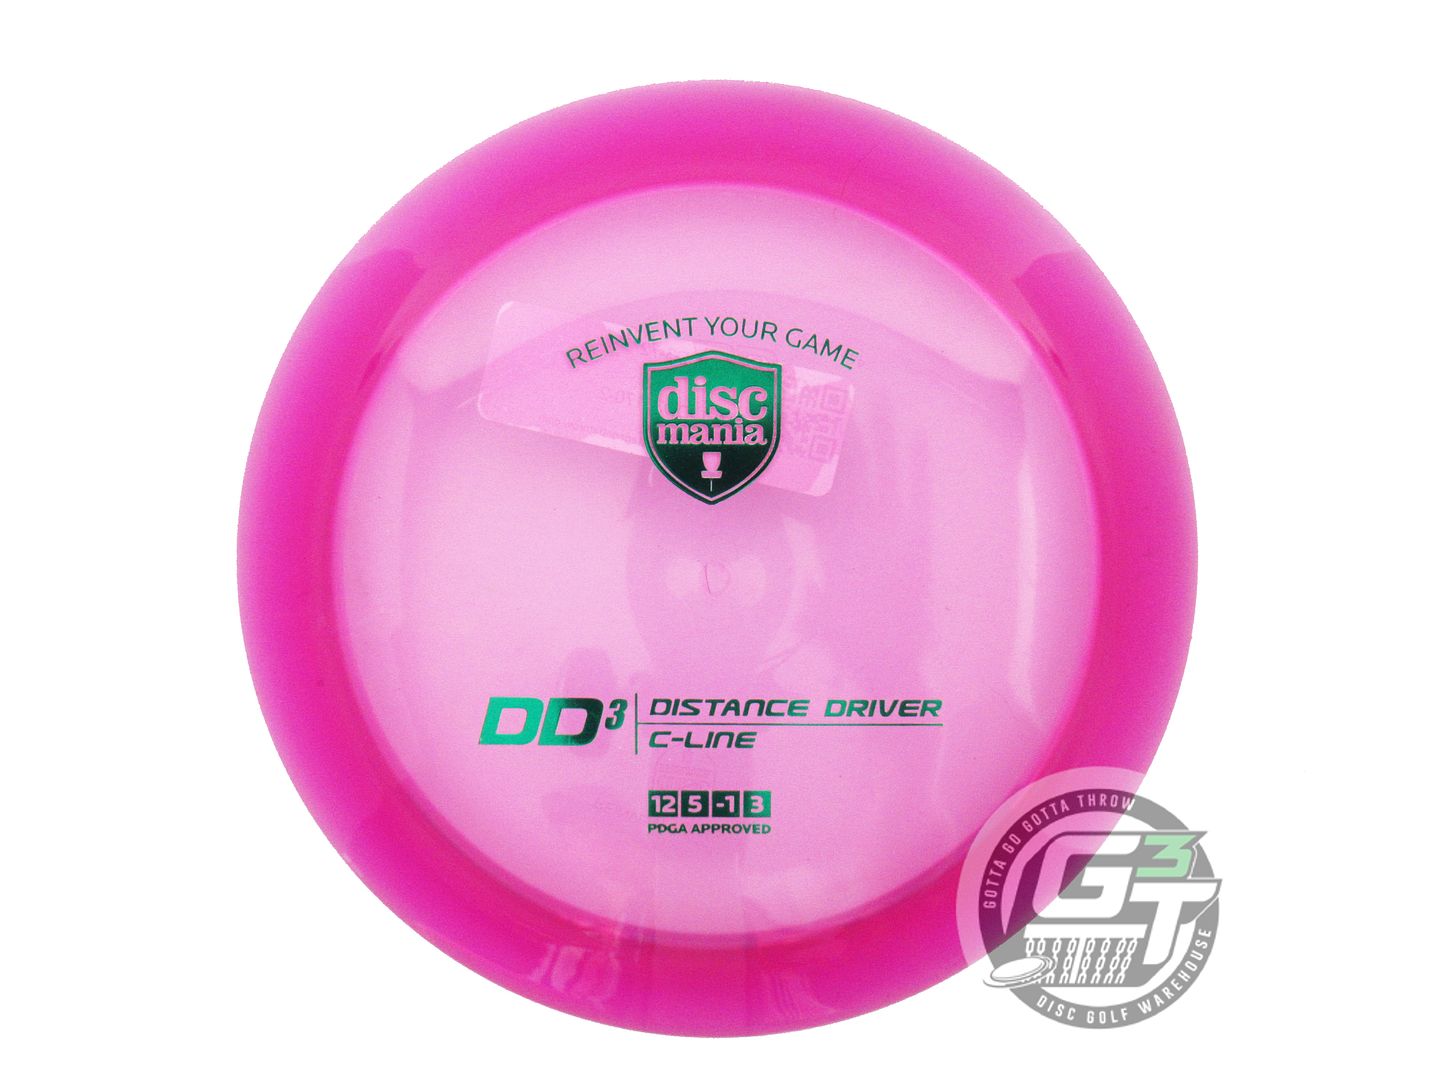 Discmania Originals C-Line DD3 Distance Driver Golf Disc (Individually Listed)